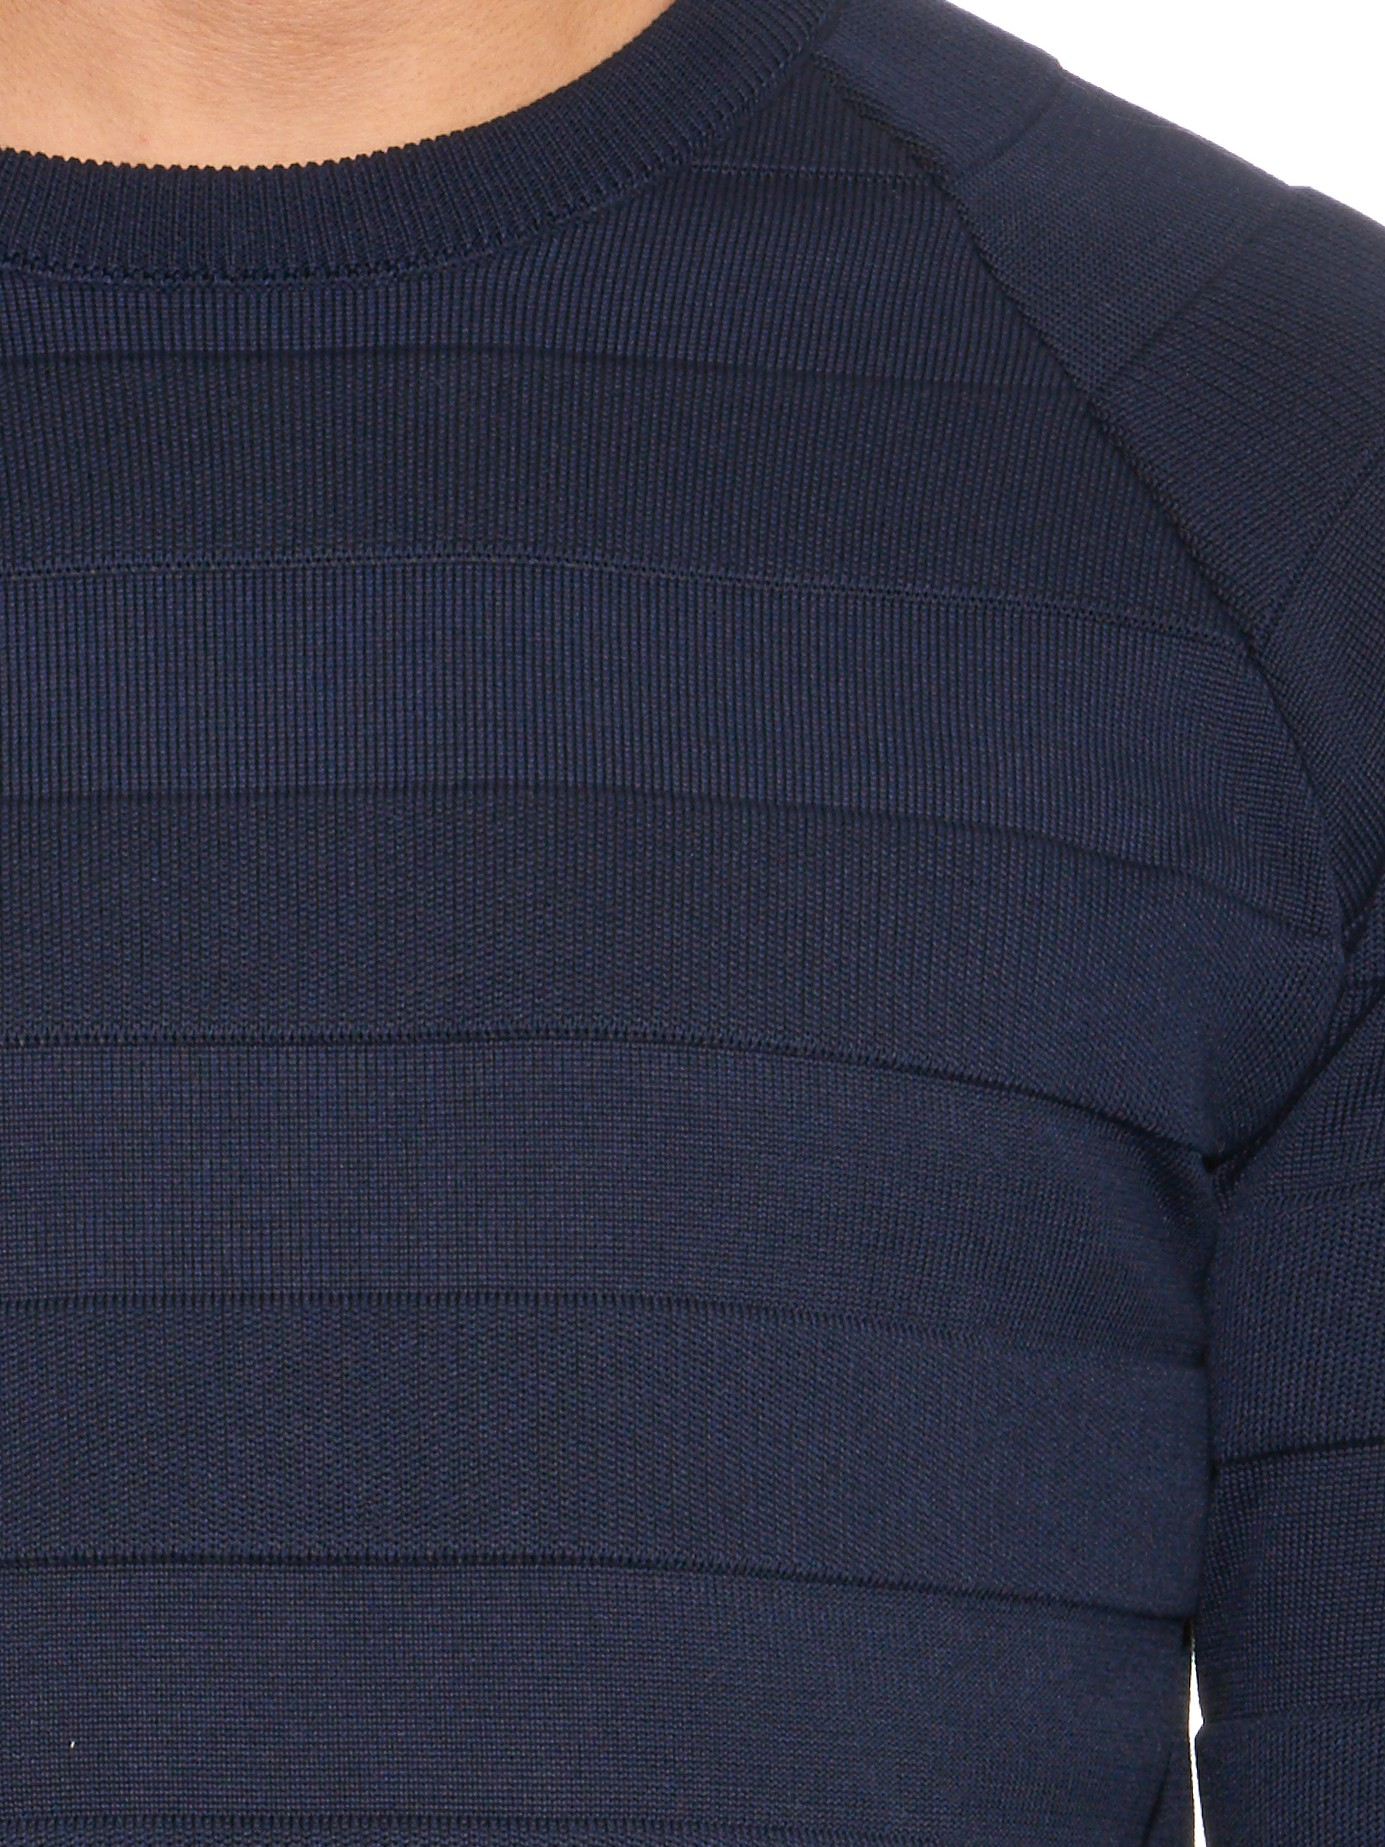 Balenciaga Crew-neck Cotton-blend Sweater in Blue for Men | Lyst